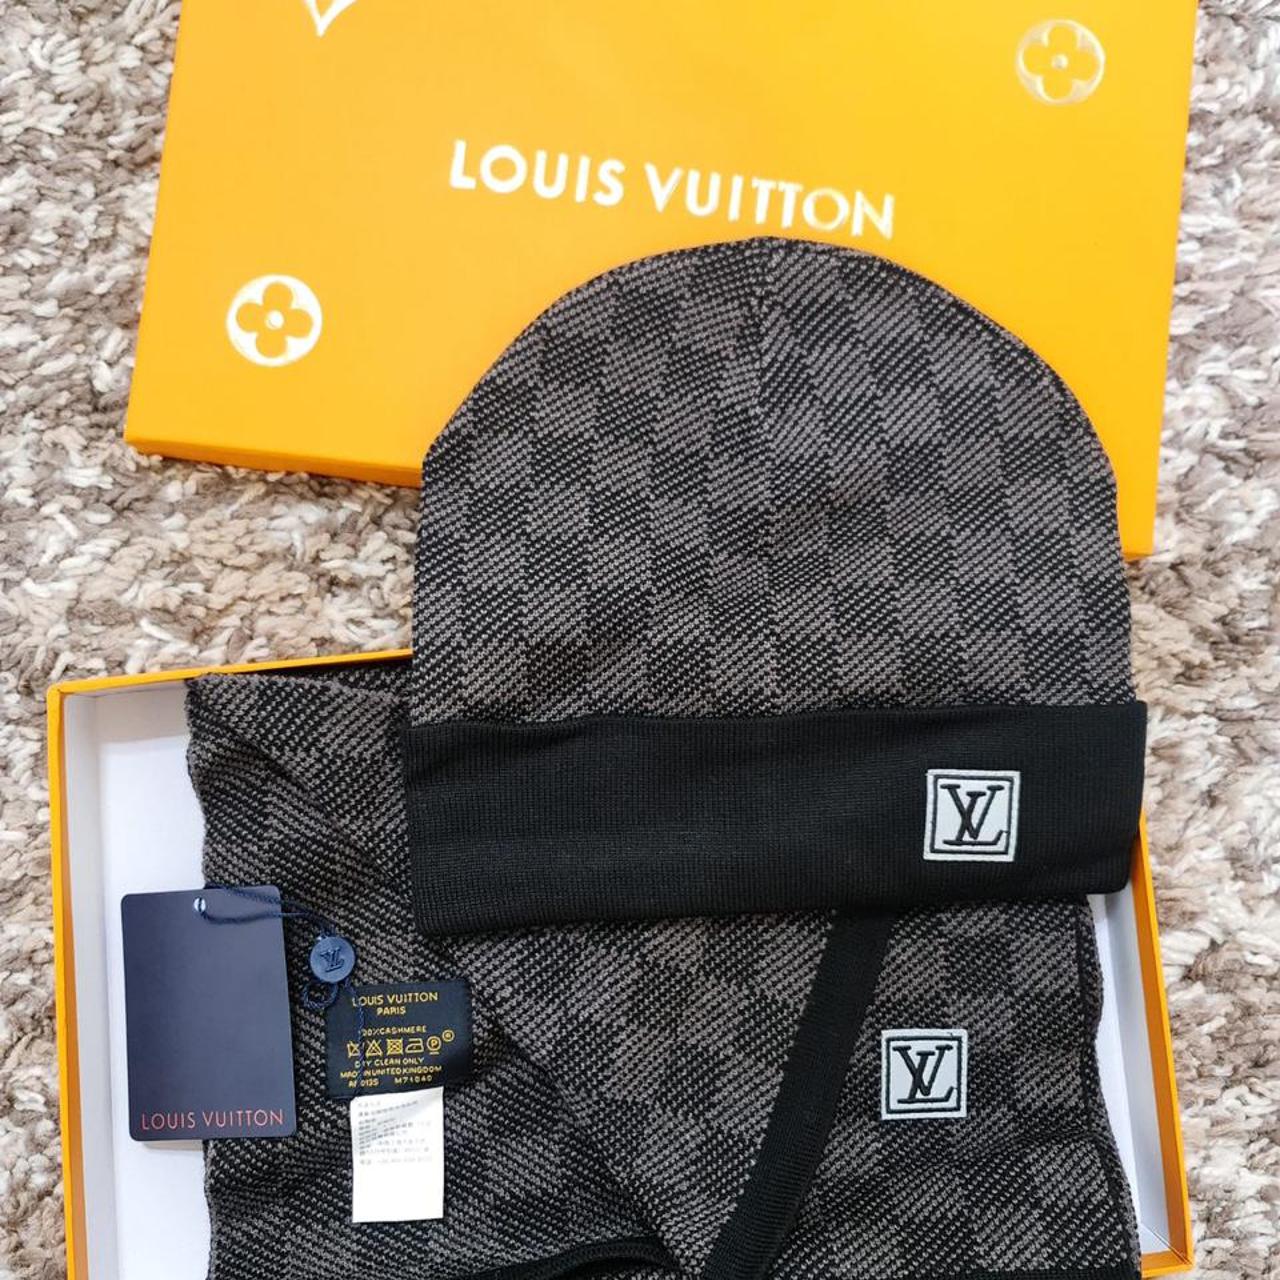 Louis Vuitton hat and scarf set brand new got - Depop